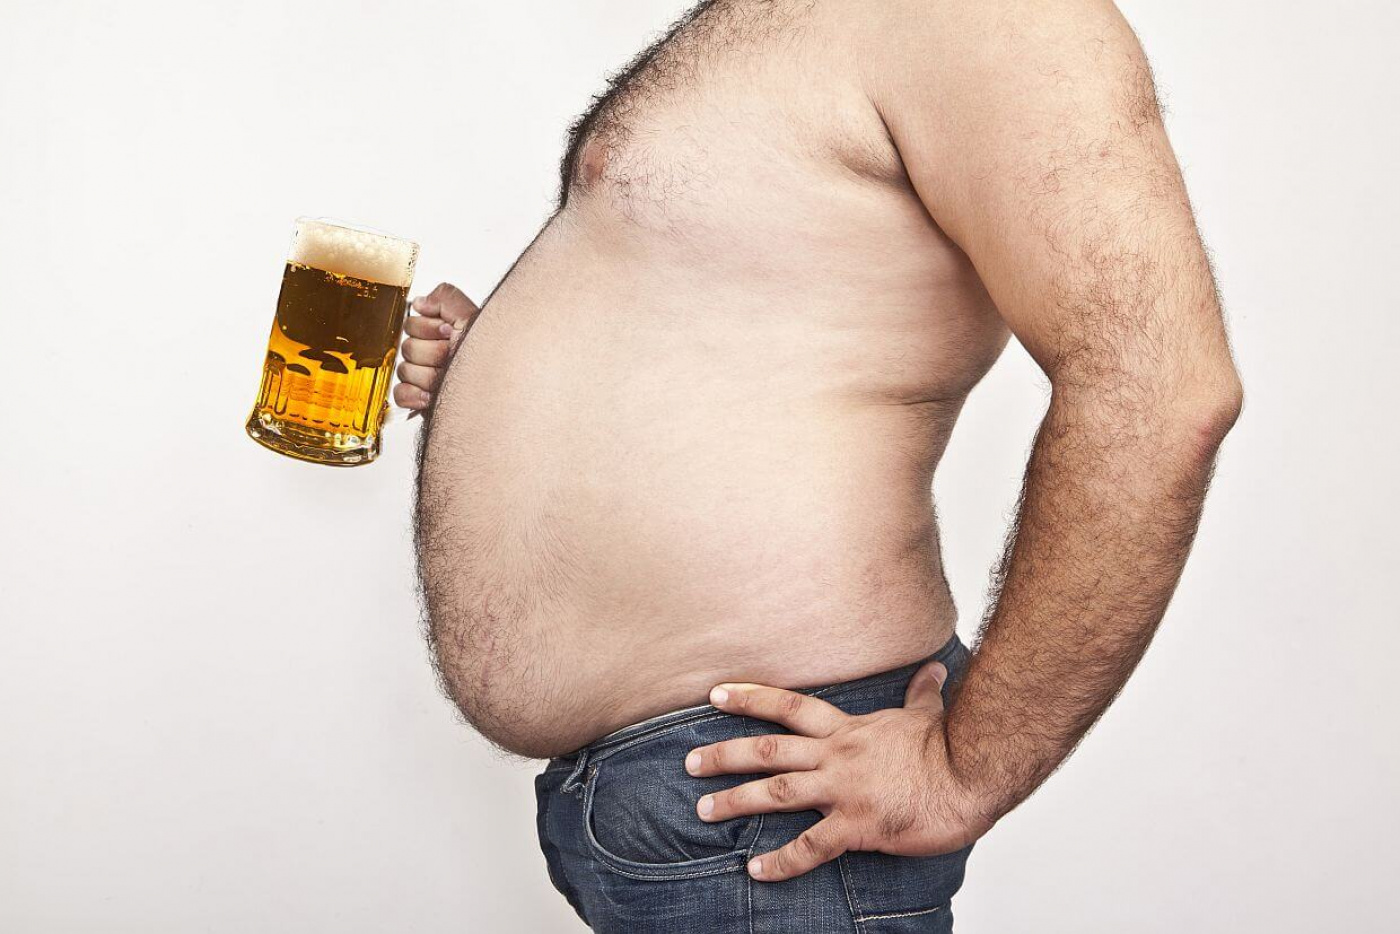 груди от пива у мужчин фото 60